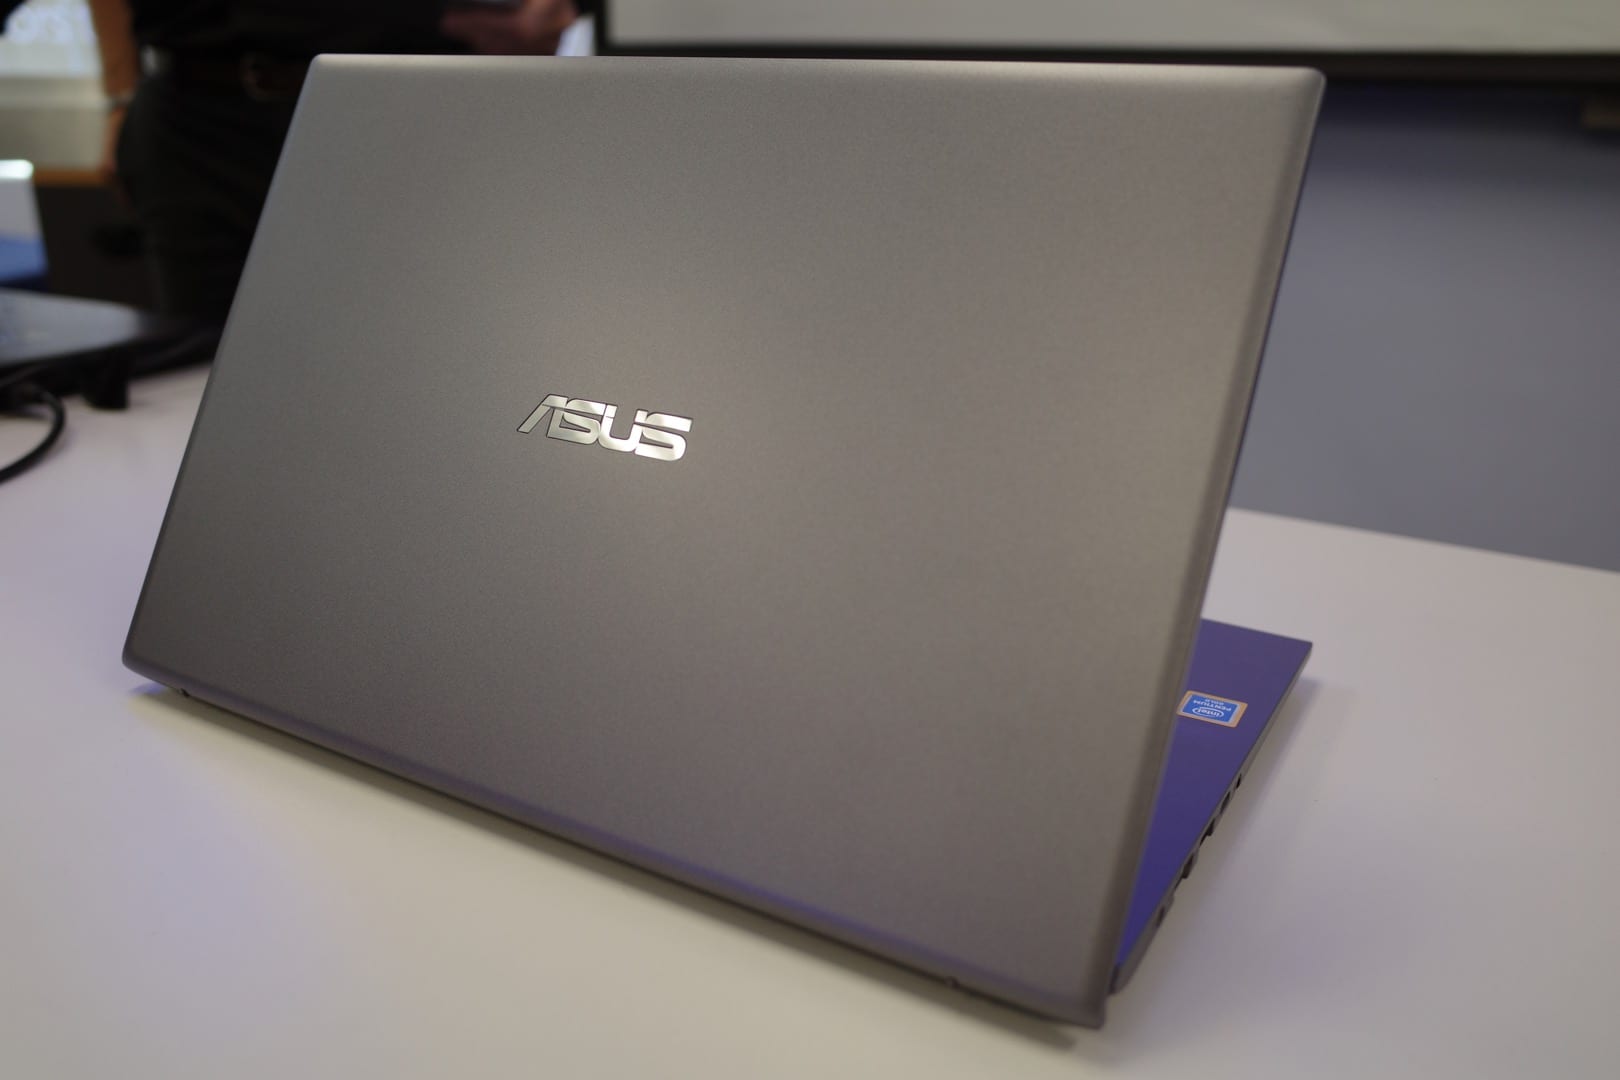 Asus เปิดตัว Vivobook 14 โน้ตบุ๊กพร้อม SSD, Windows 10 หนัก 1.5 กก. ราคาแค่ 12,990 บาท!